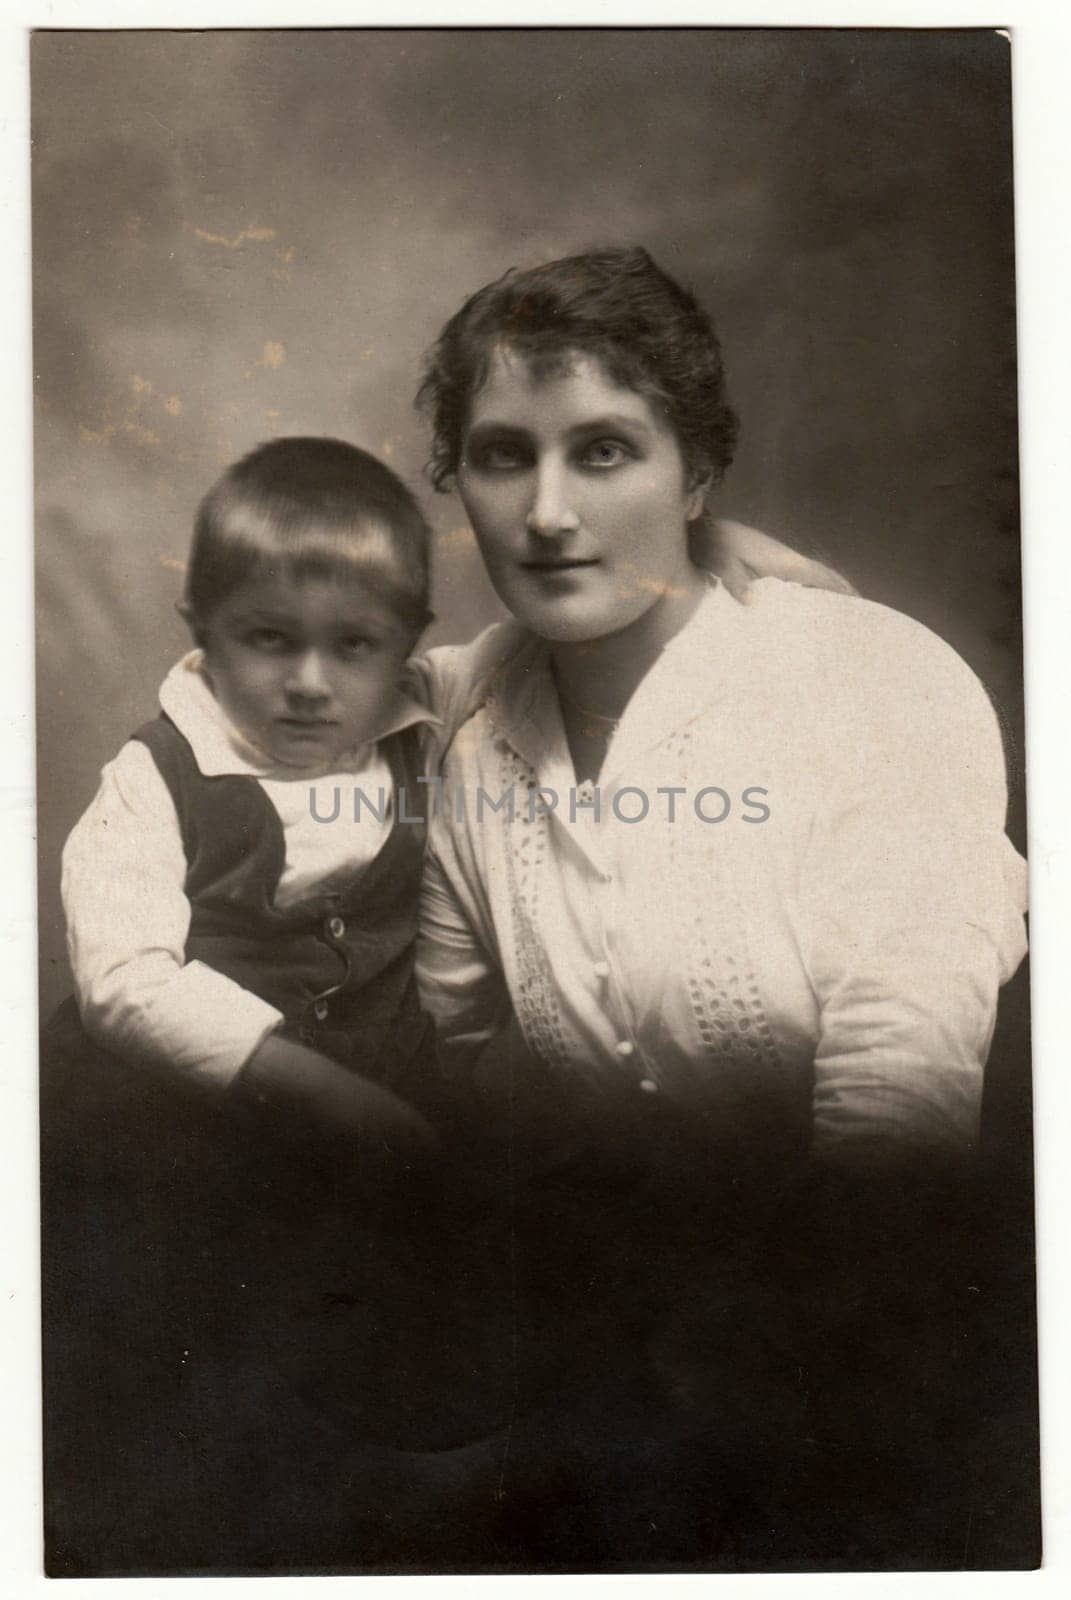 THE CZECHOSLOVAK REPUBLIC - CIRCA 1920s: Vintage photo shows a small boy with mother. Retro black and white studio photography. Circa 1920s.